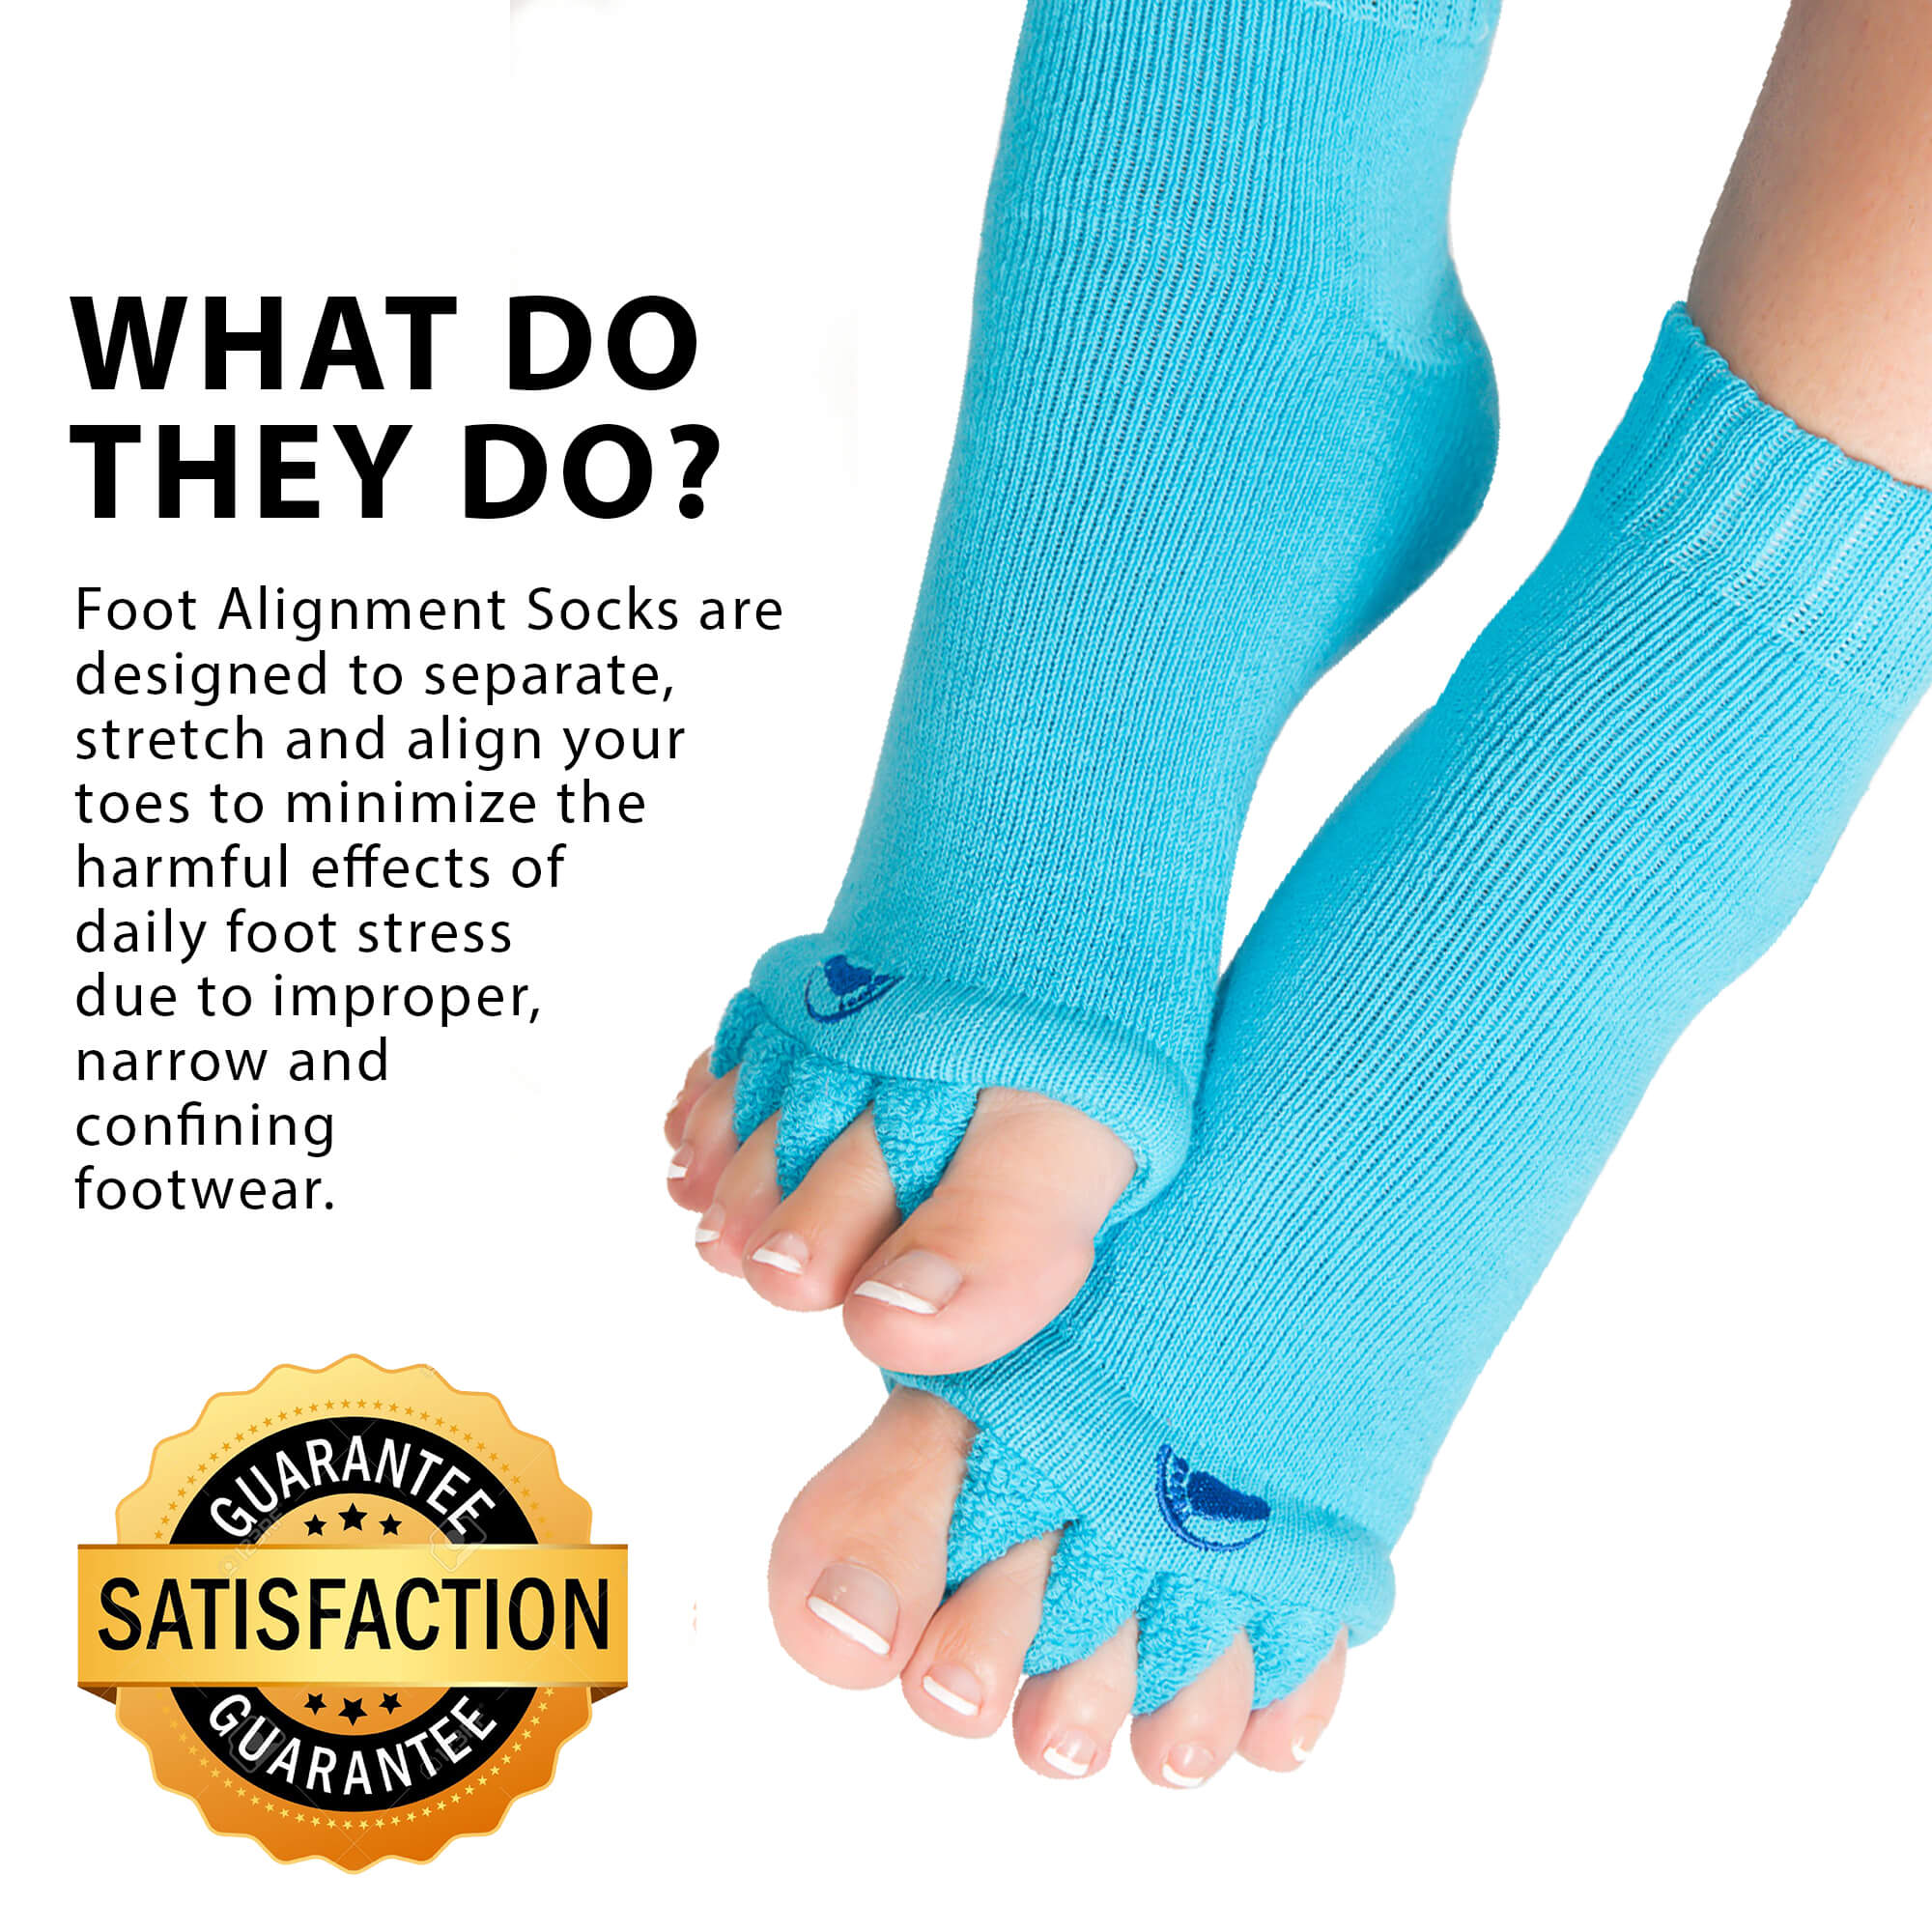 Flat foot - The Original Foot Alignment Socks